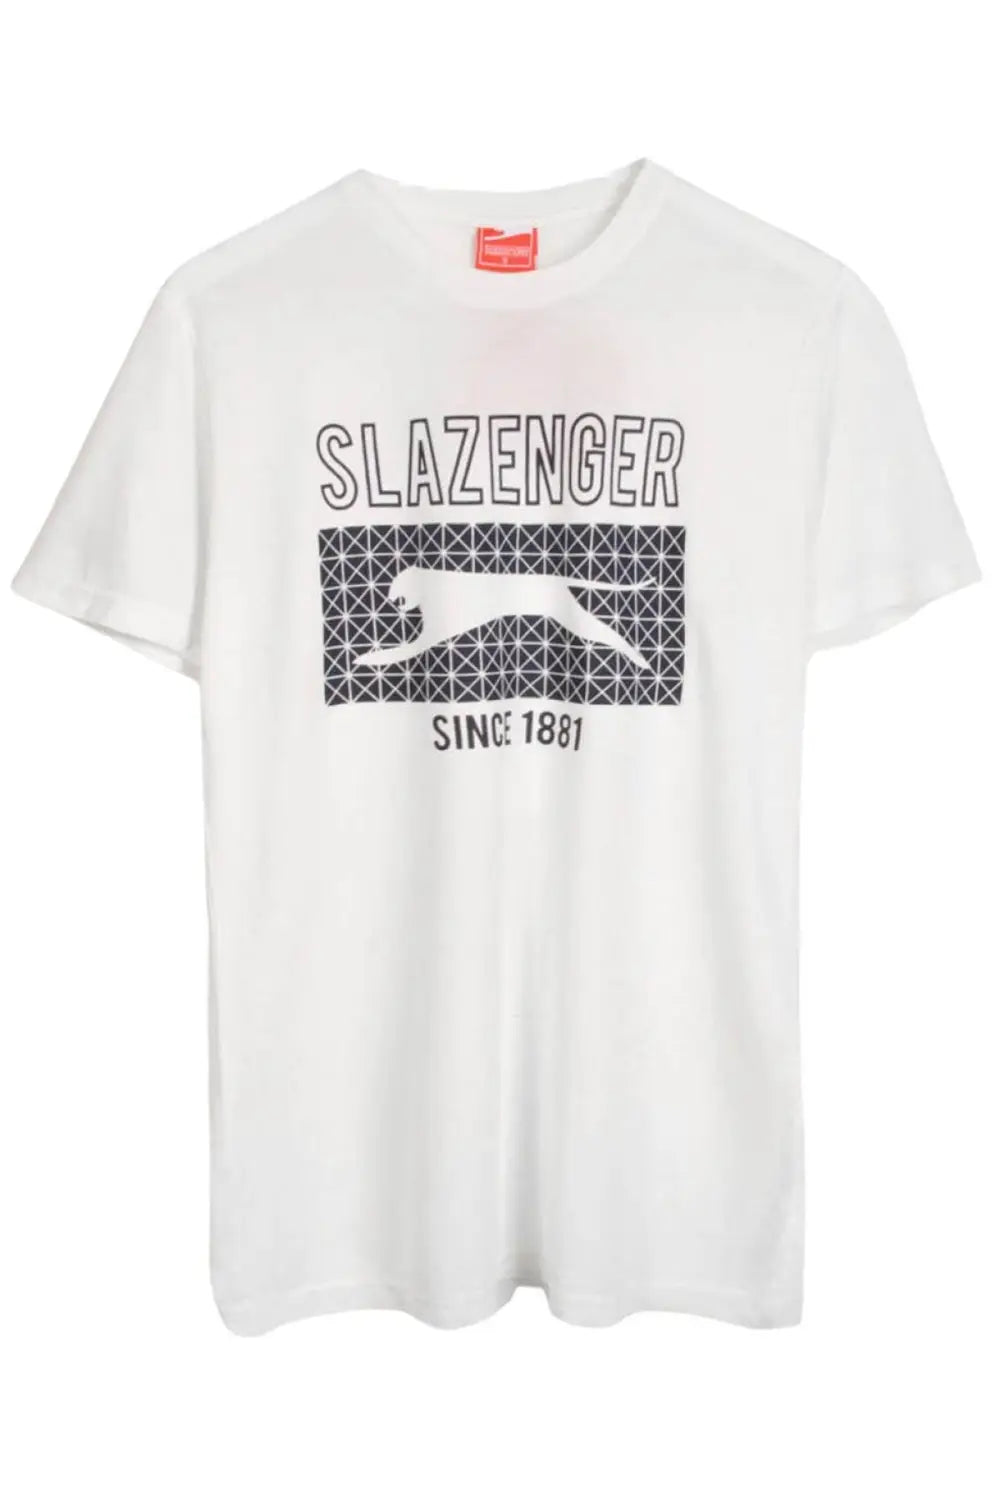 Slazenger Vintage Style Graphic T-Shirt